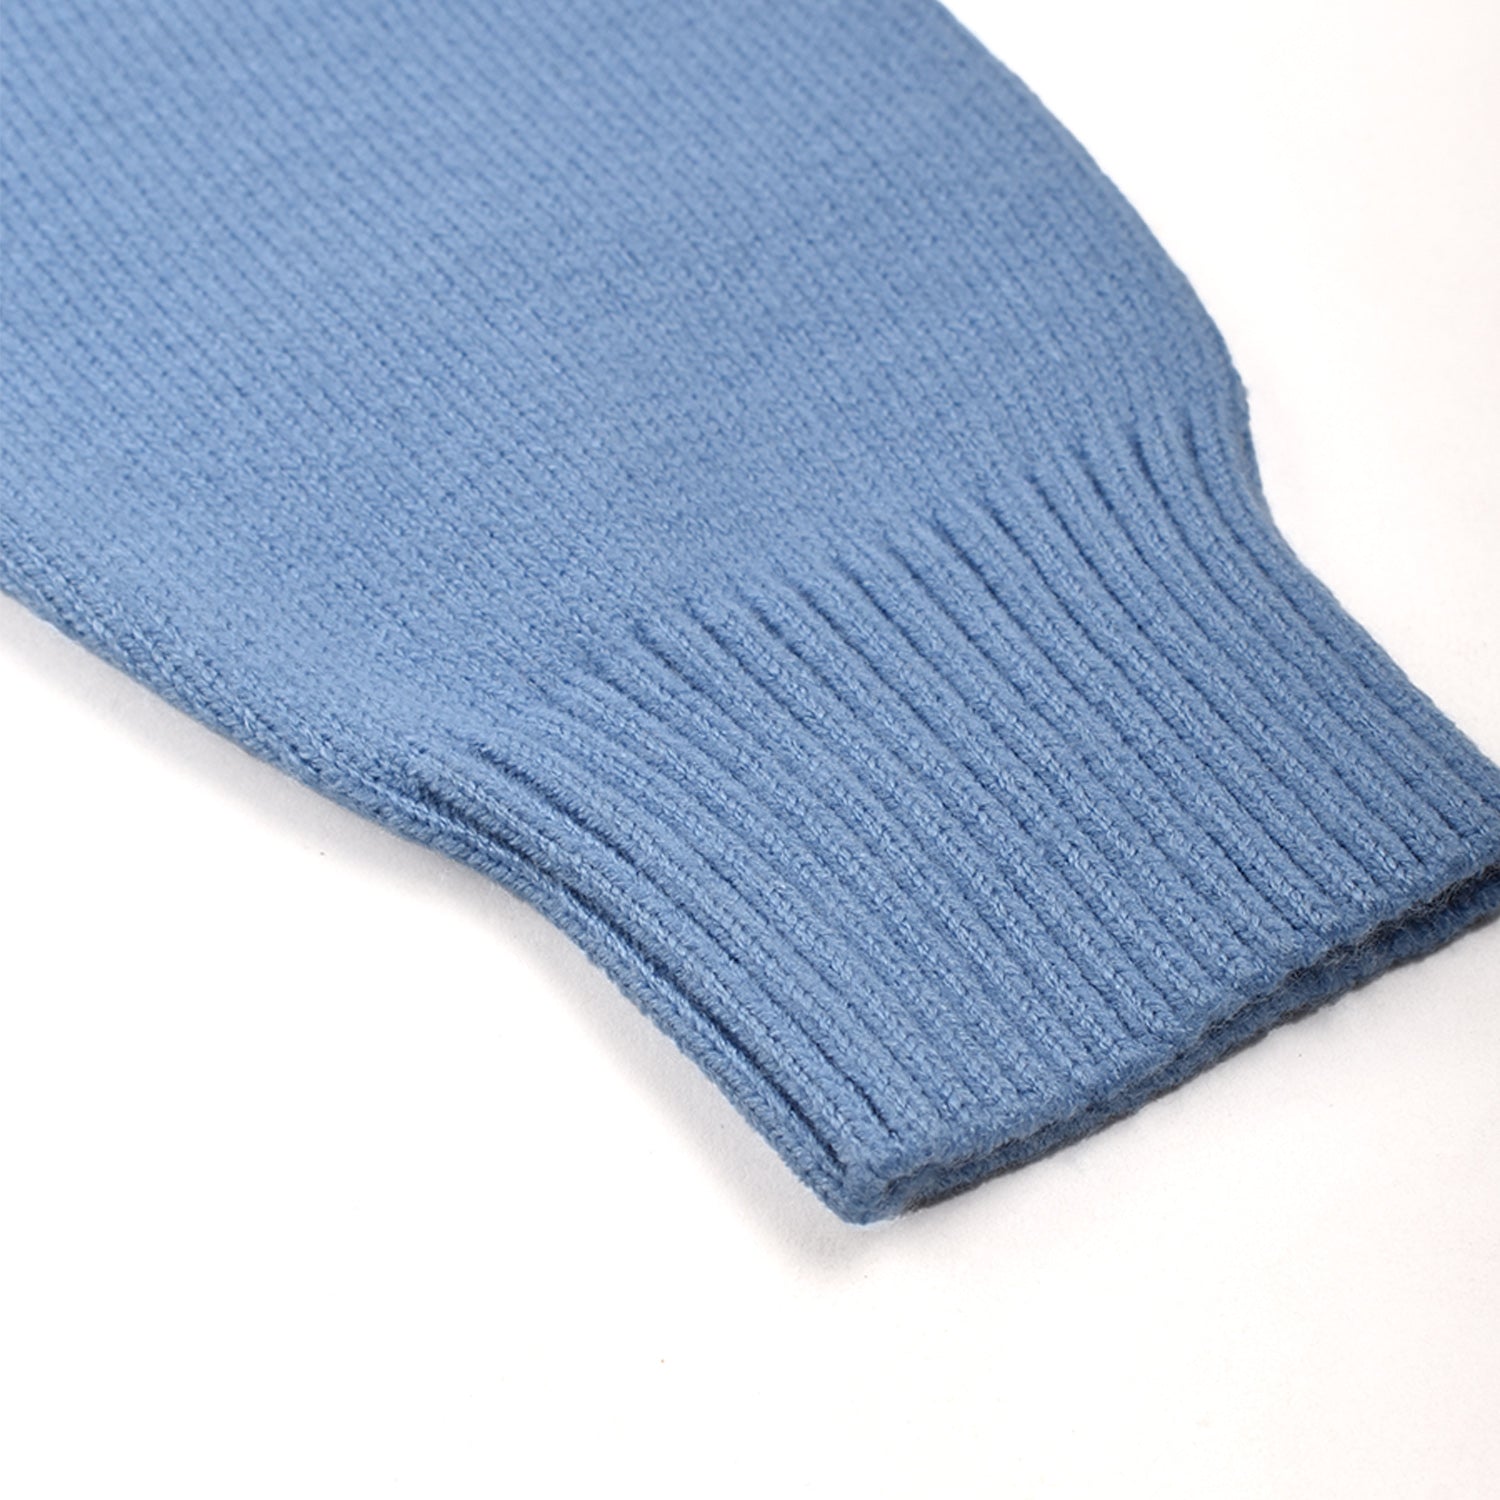 Organic Cotton Unisex Baby Winter Sweaters - Blue